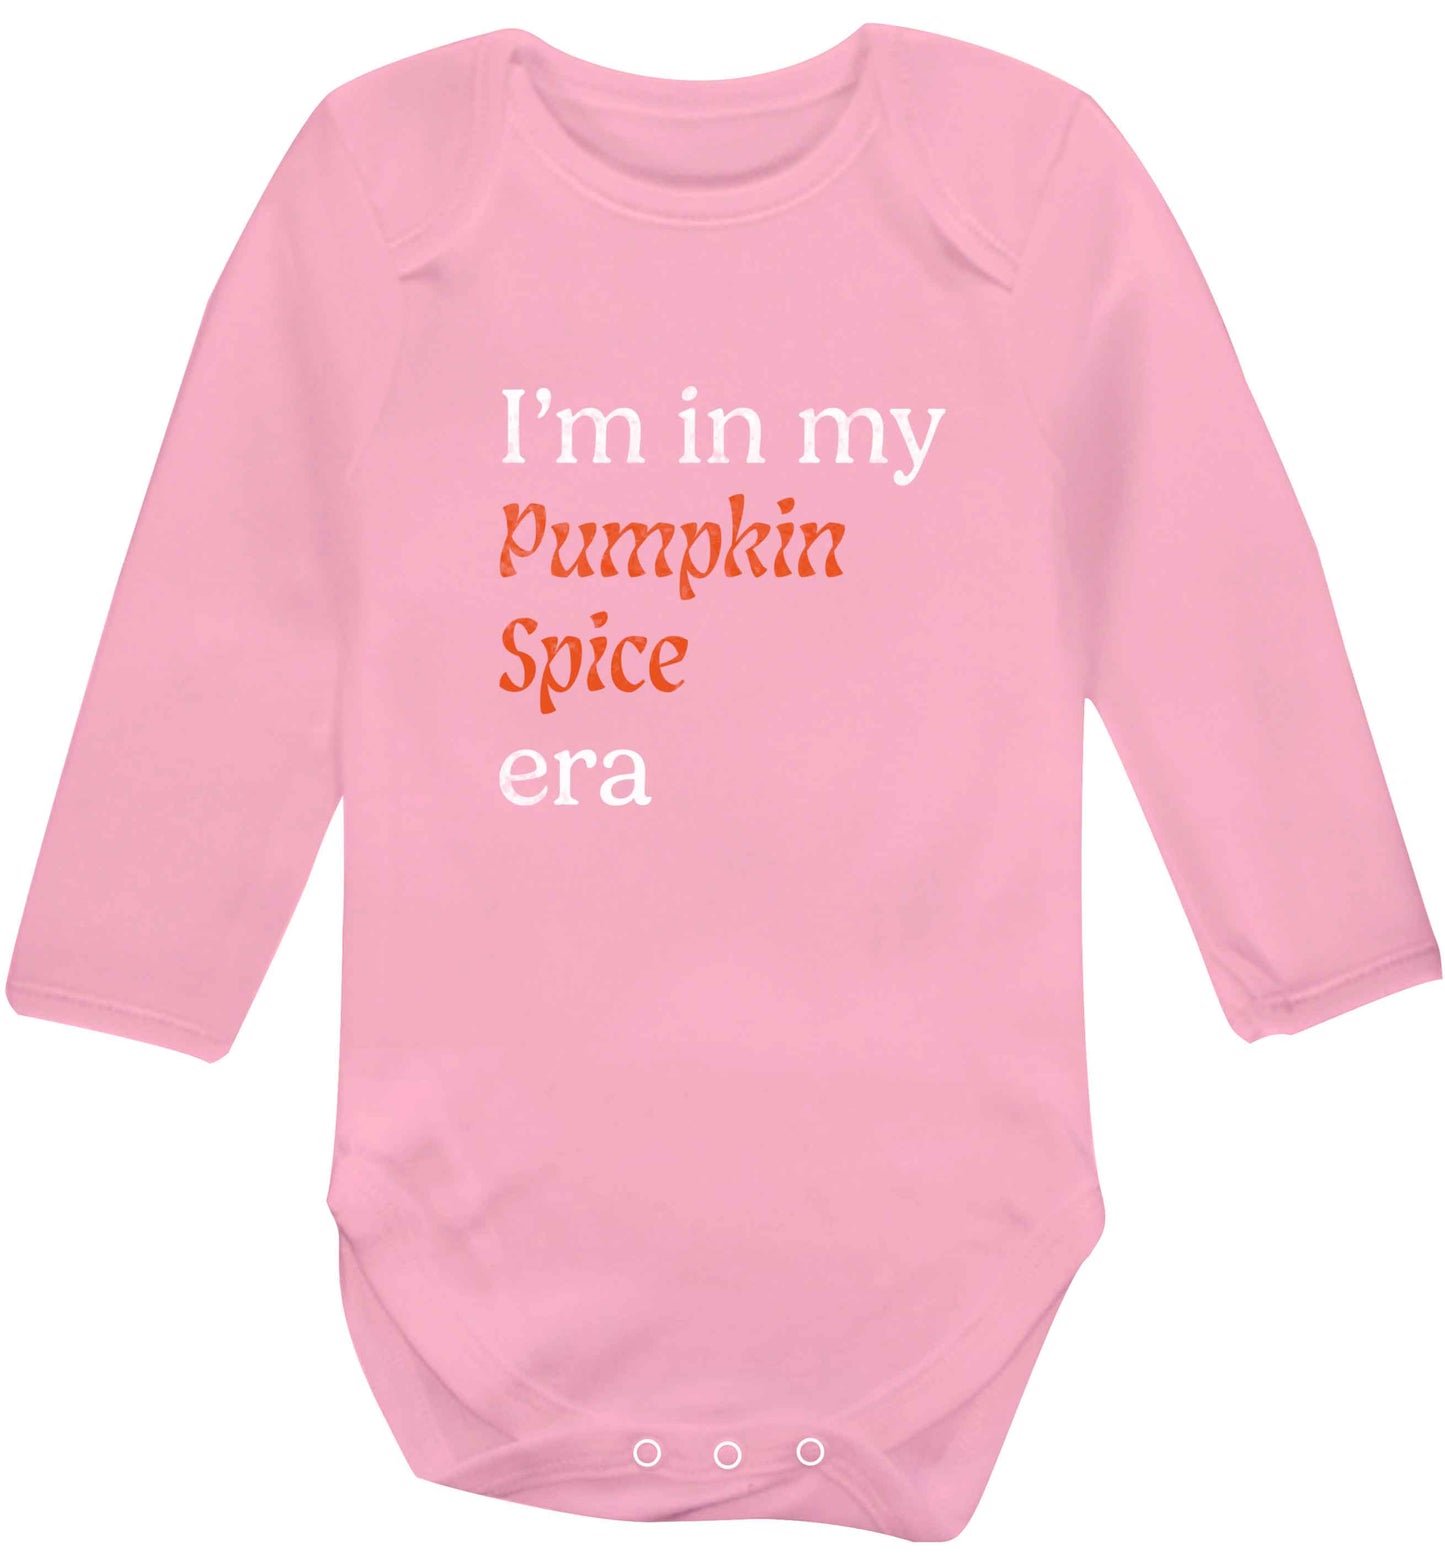 I'm in my pumpkin spice era Kit baby vest long sleeved pale pink 6-12 months